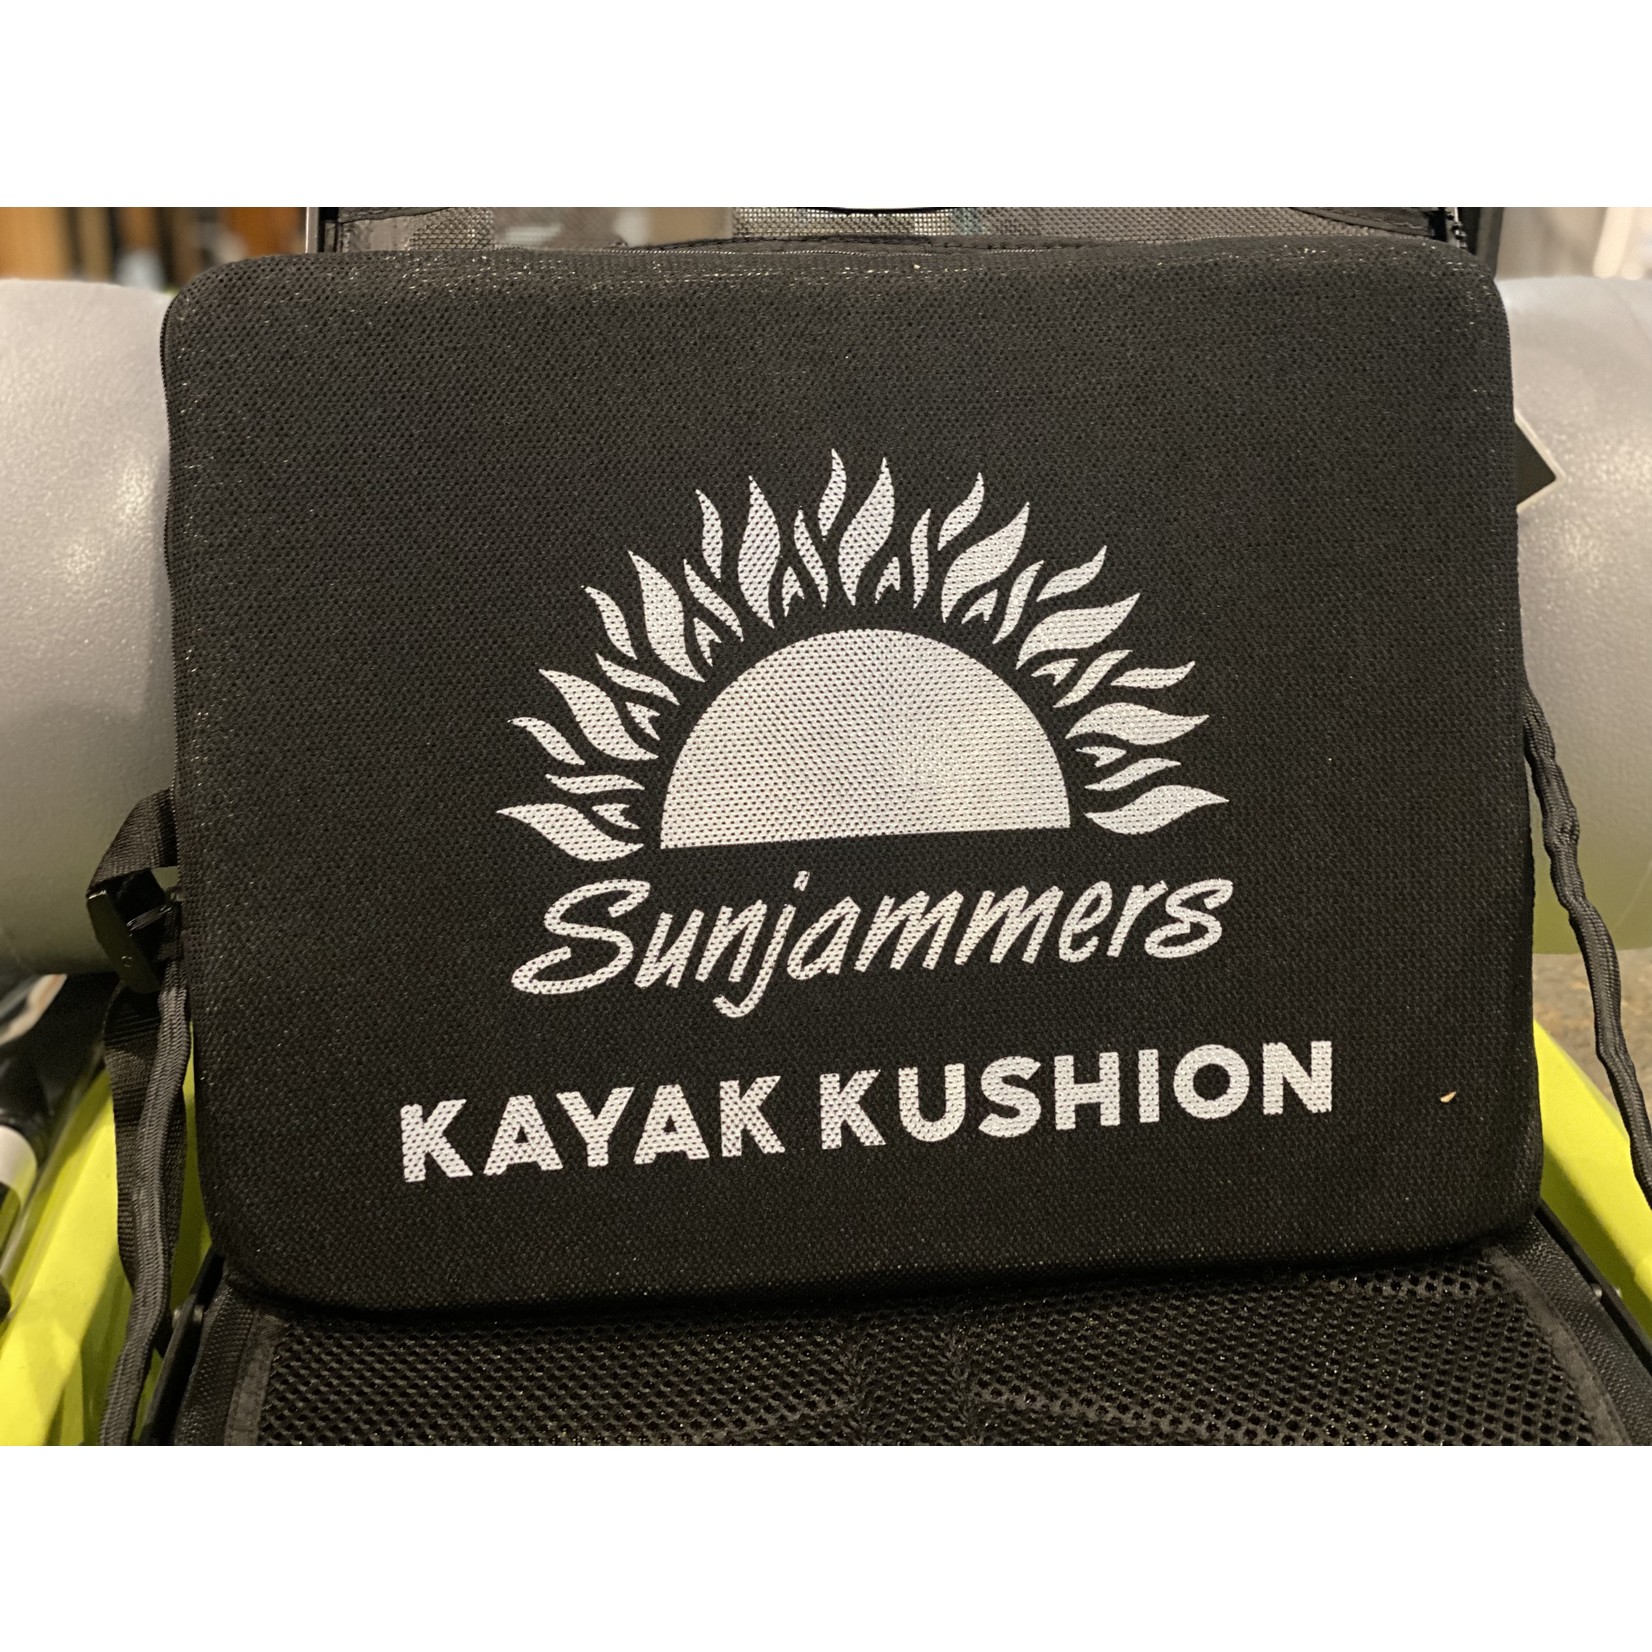 kayak kushion Sunjammers Kayak Kushion  (firm)